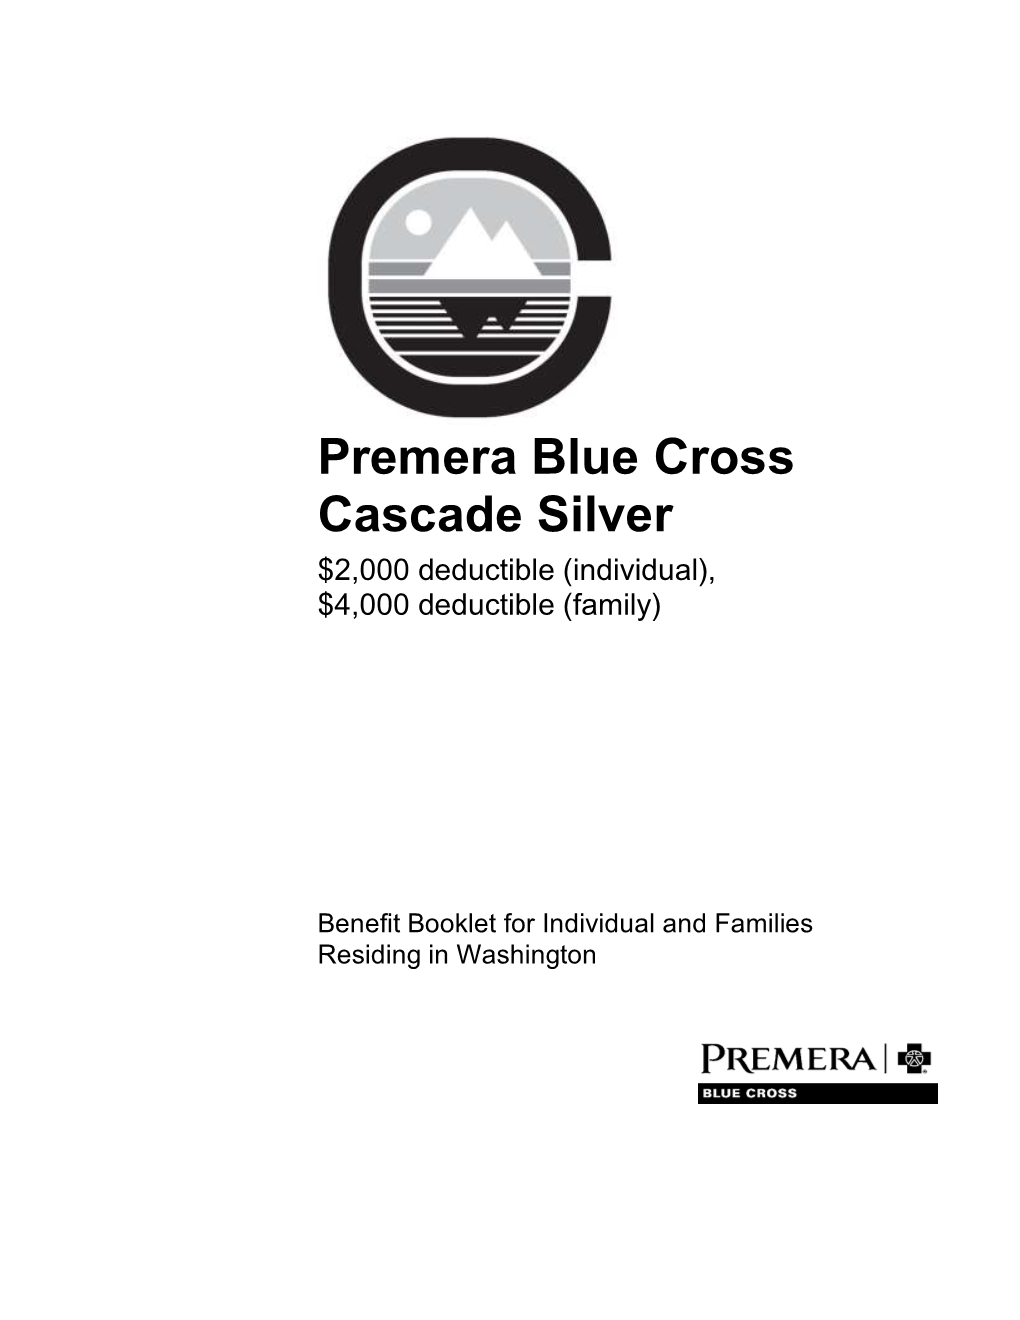 Premera Blue Cross Cascade Silver $2,000 Deductible (Individual), $4,000 Deductible (Family)